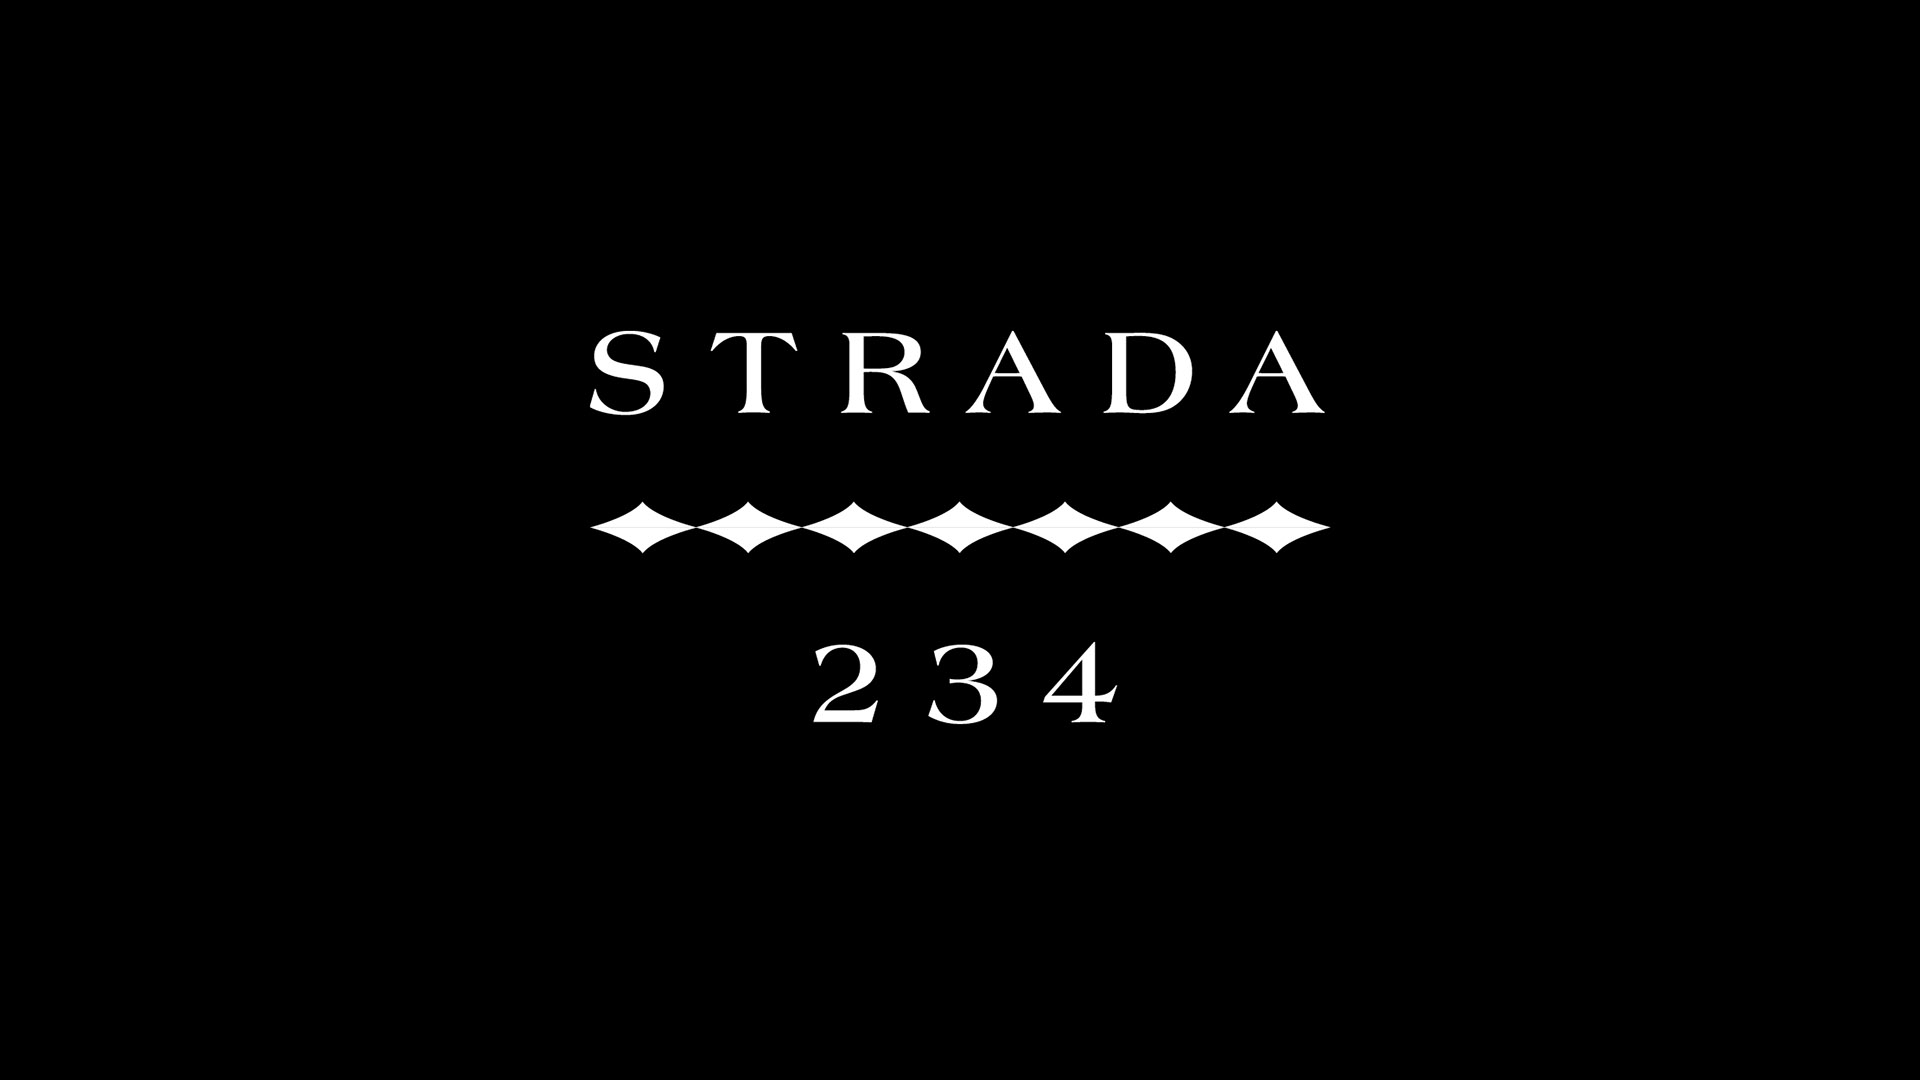 strada 234 white logo on black by boston logo designer